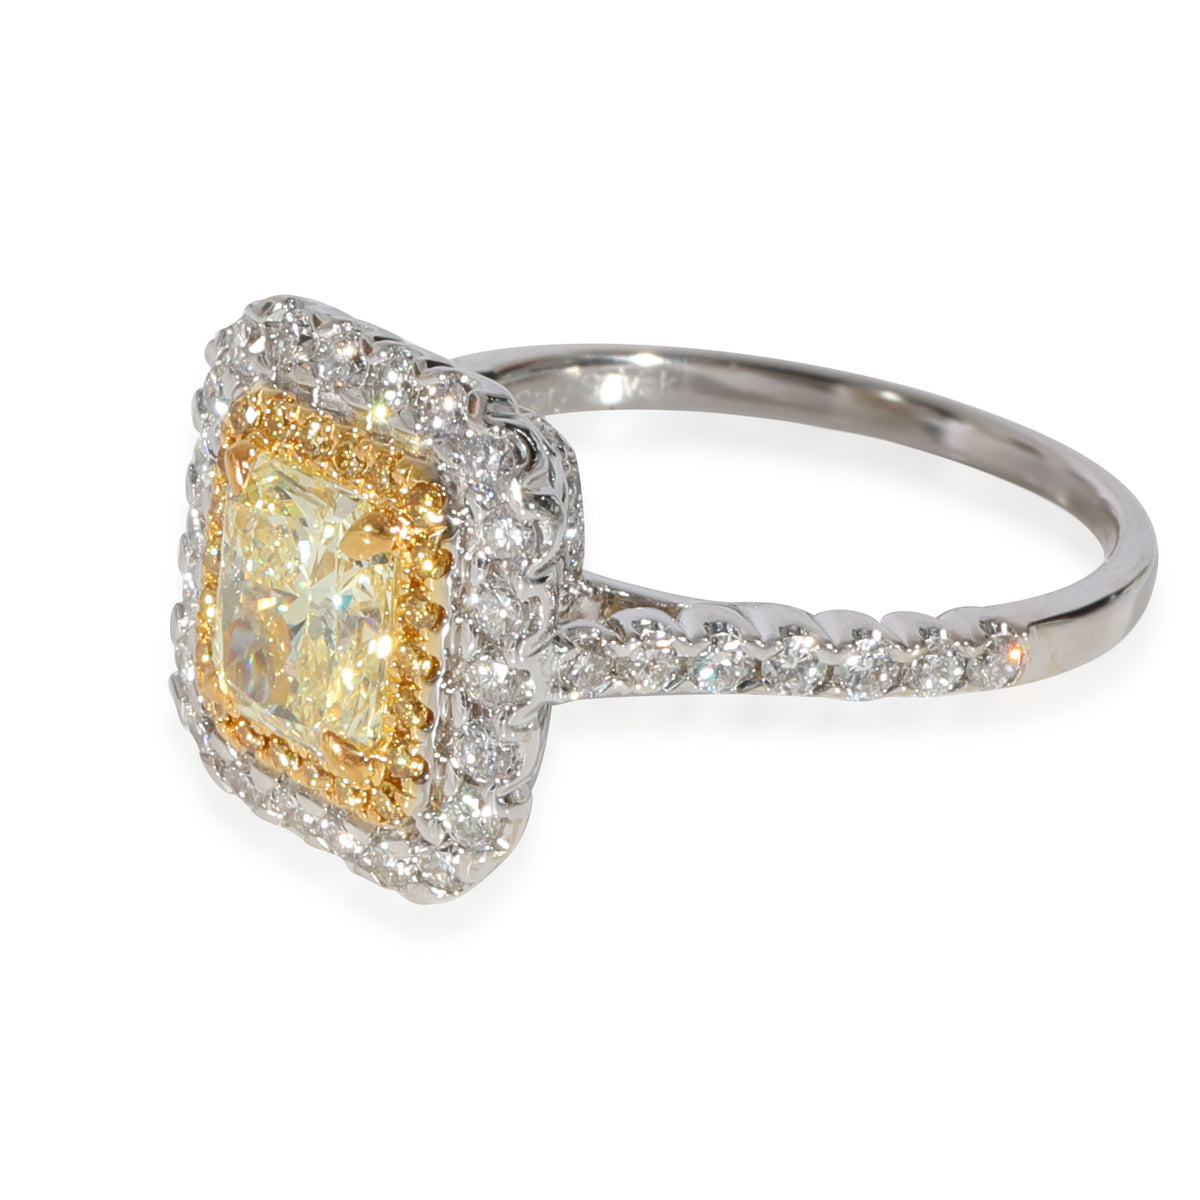 Gary Spivak Diamond Engagement Ring in 14k Gold Fancy Yellow VS1 1.80 CTW